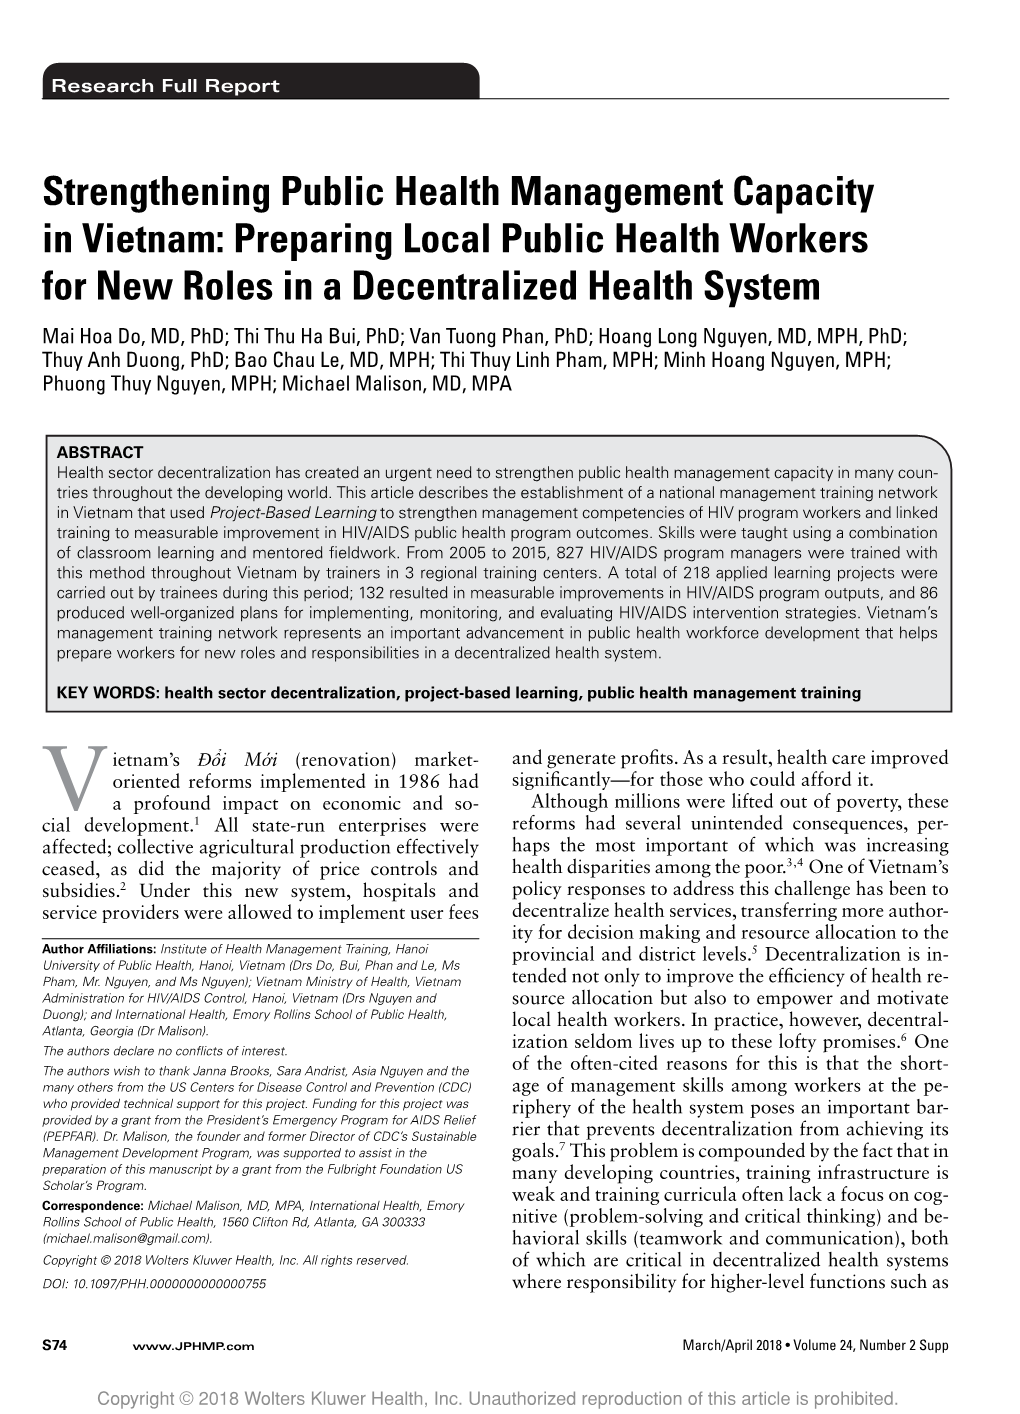 Strengthening Public Health Management Capacity in Vietnam